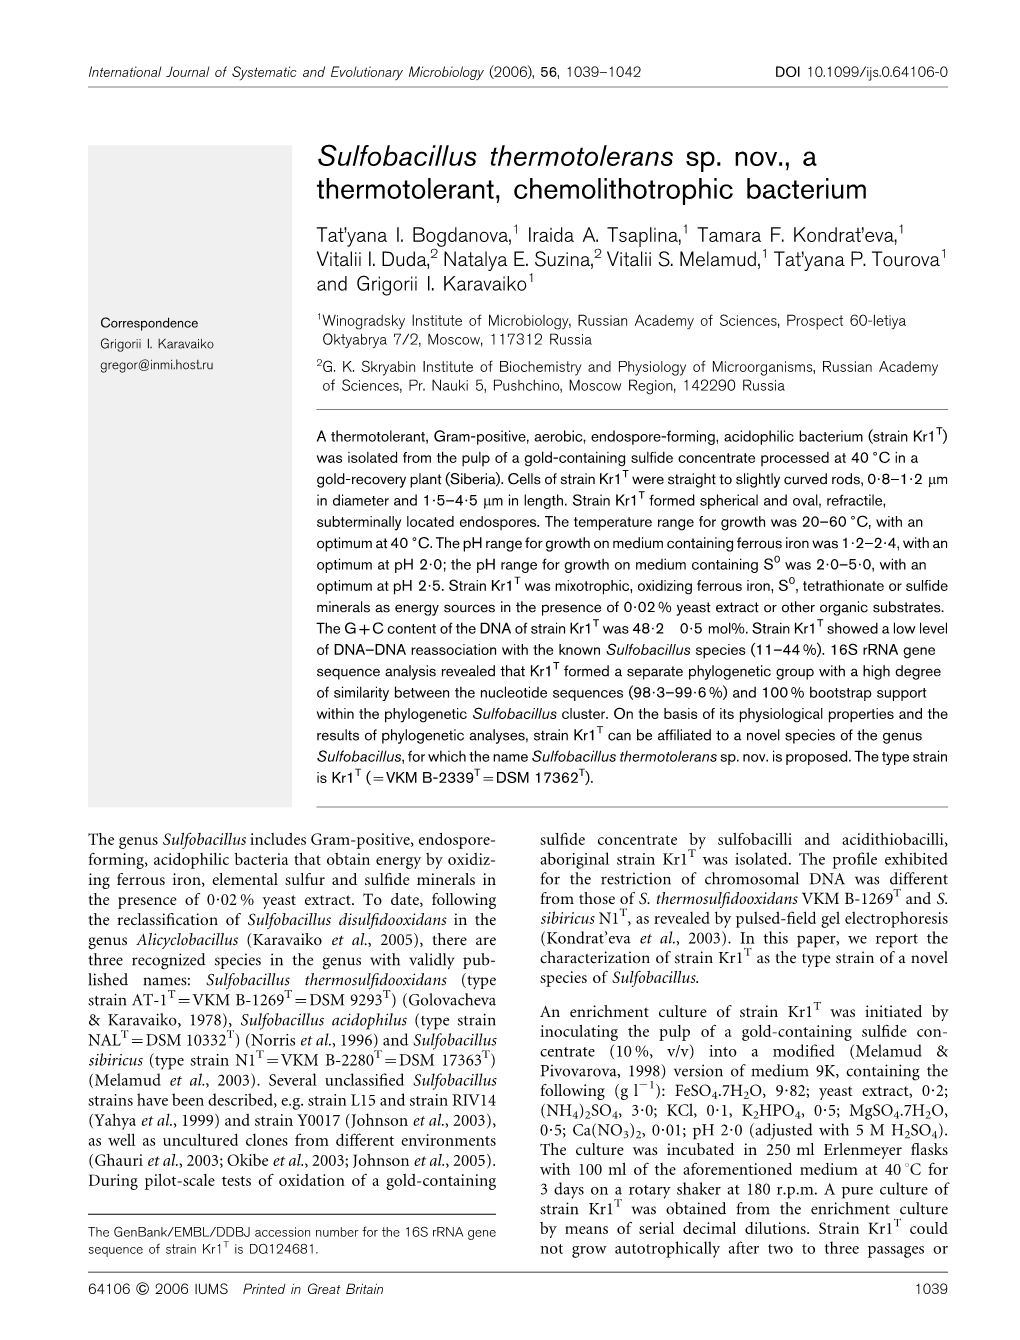 Sulfobacillus Thermotolerans Sp. Nov., a Thermotolerant, Chemolithotrophic Bacterium